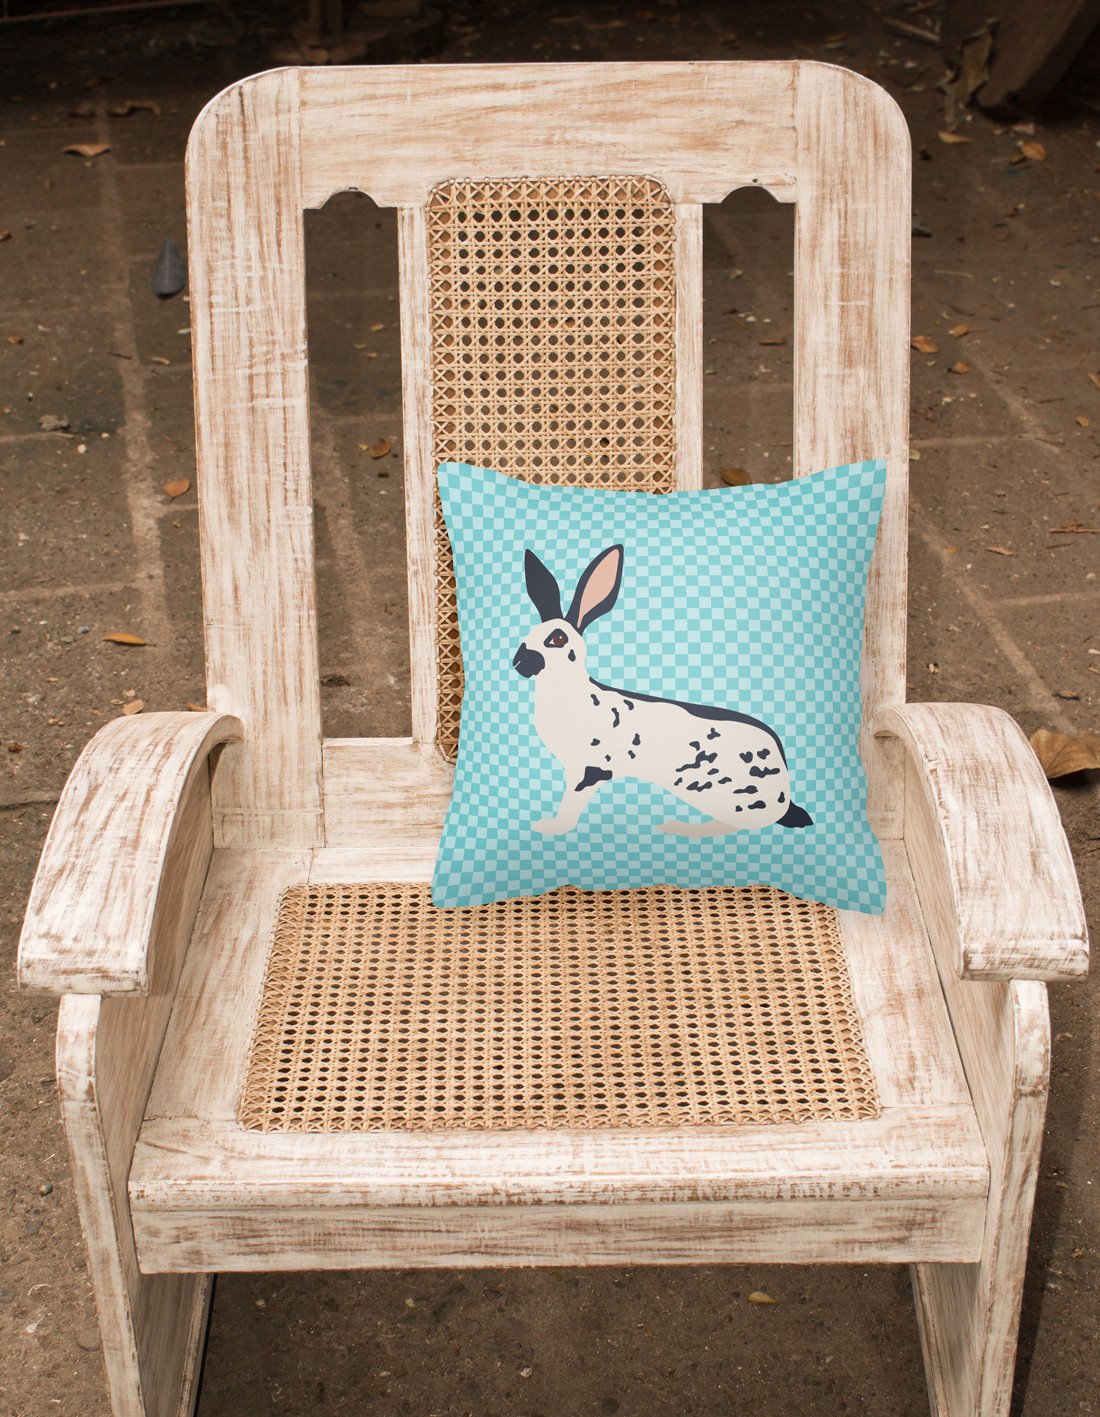 English Spot Rabbit Blue Check Fabric Decorative Pillow BB8135PW1818 by Caroline's Treasures